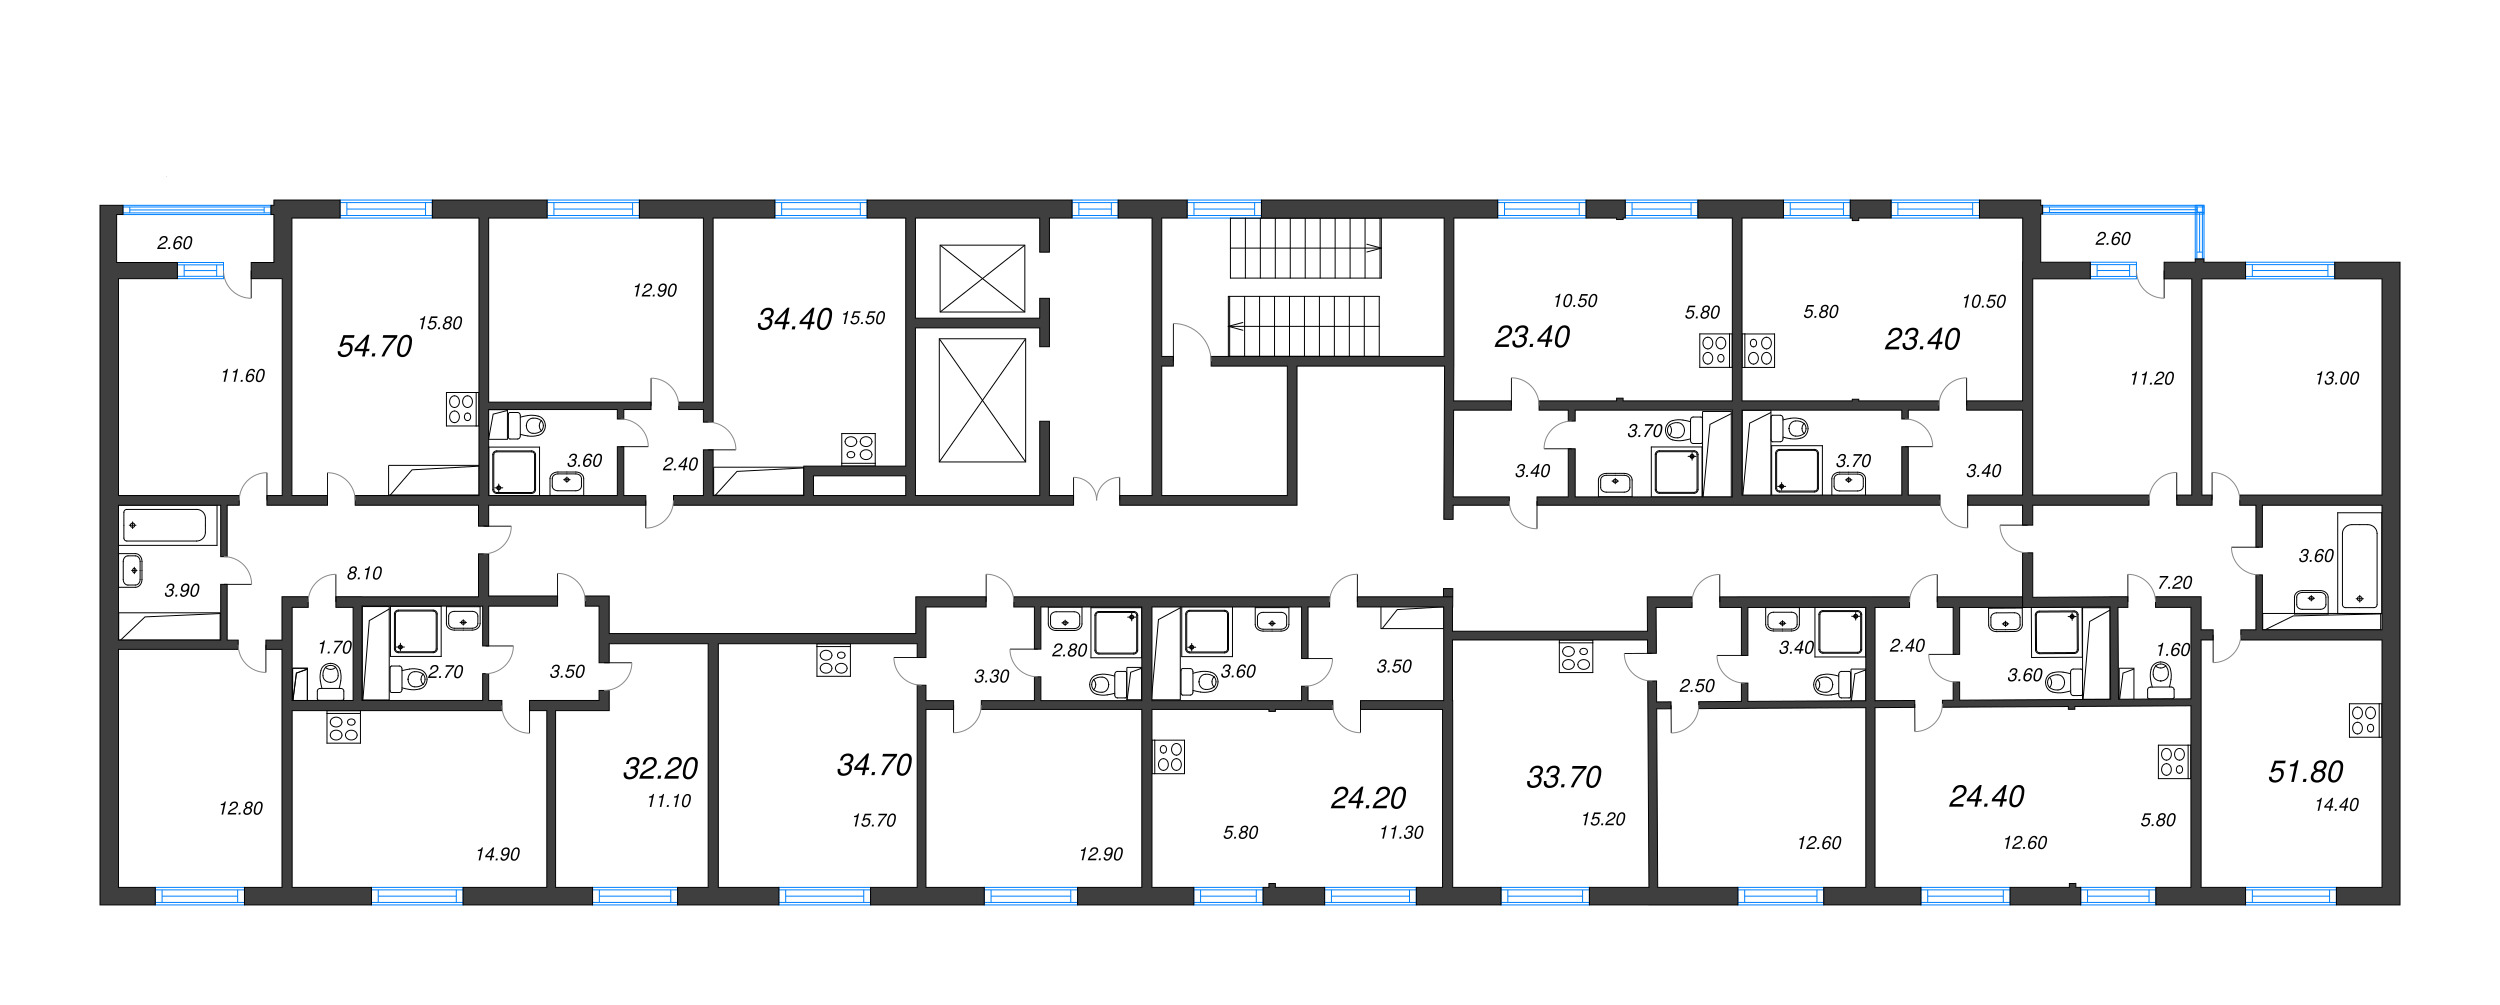 2-комнатная (Евро) квартира, 33.7 м² - планировка этажа